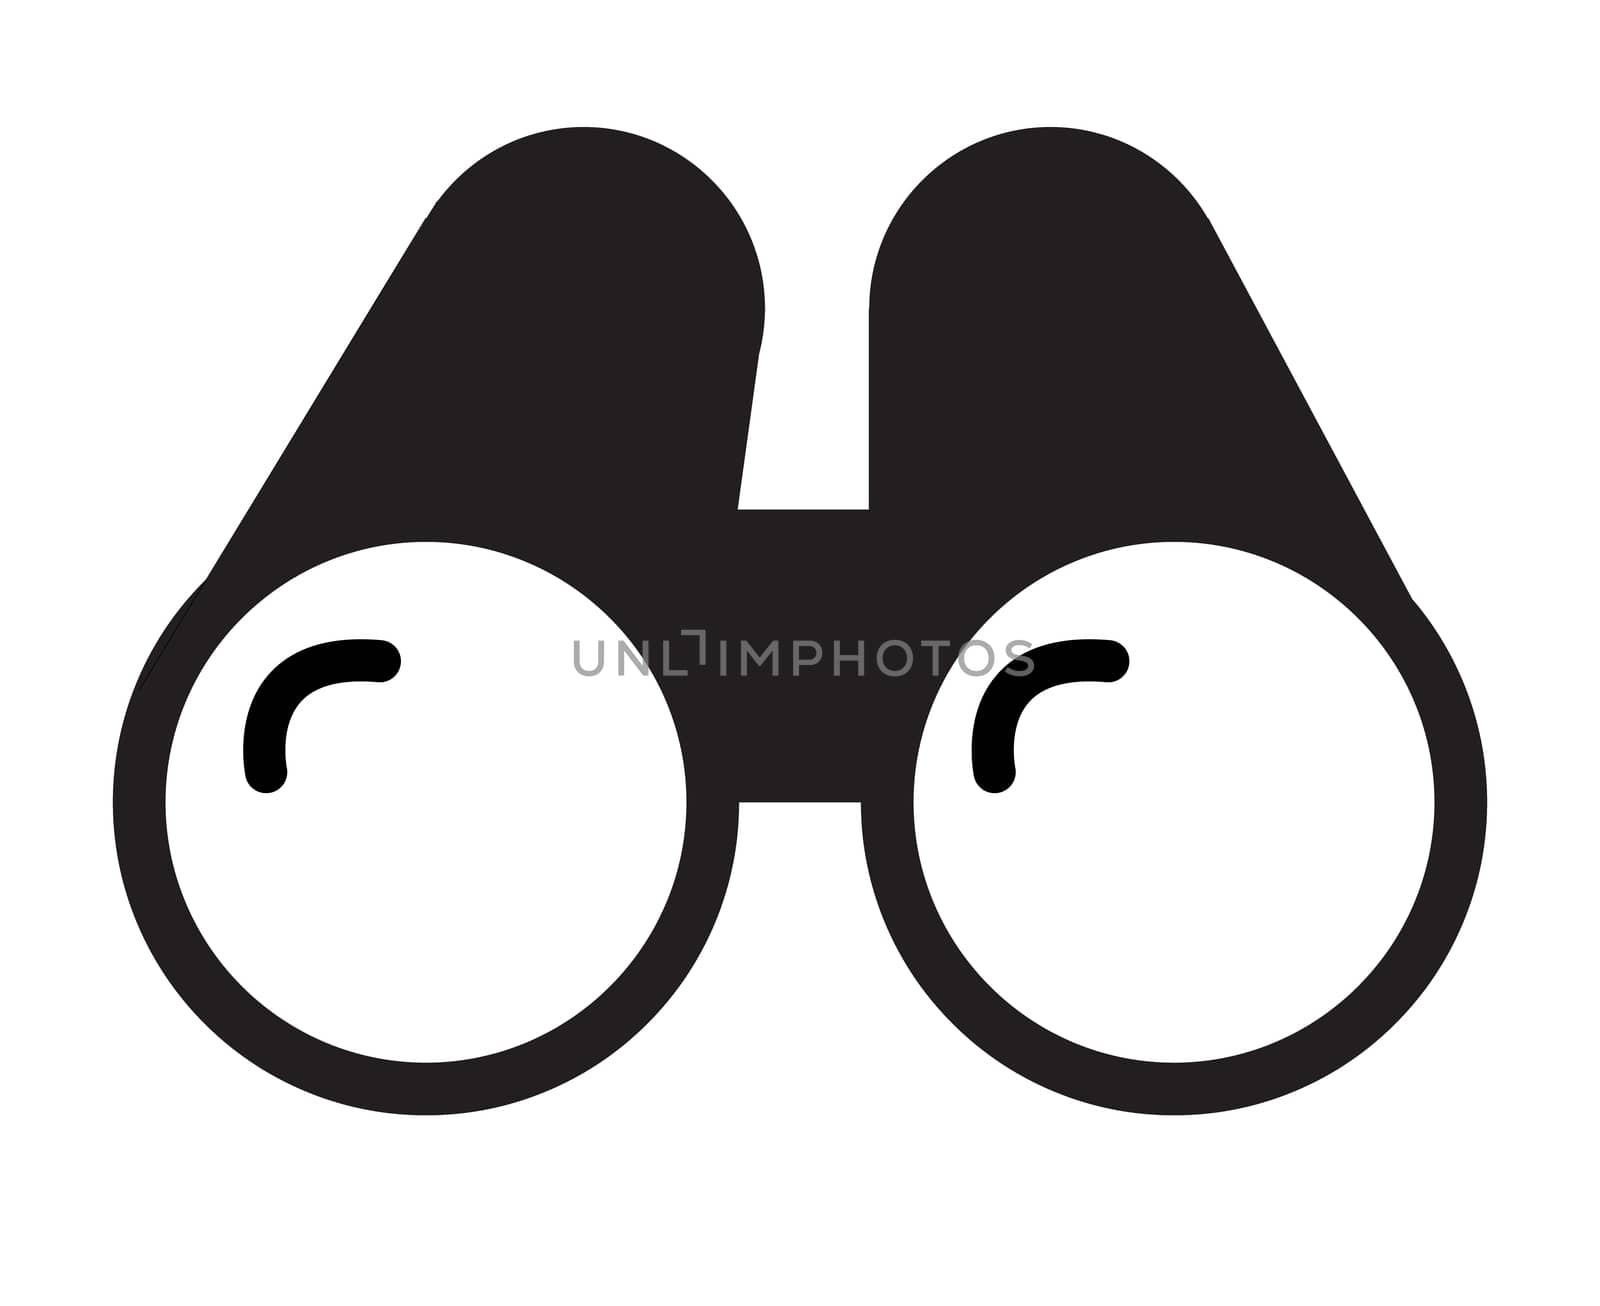 black binoculars icon on white background. flat style. black binoculars for your web site design, logo, app, UI. binoculars sign.